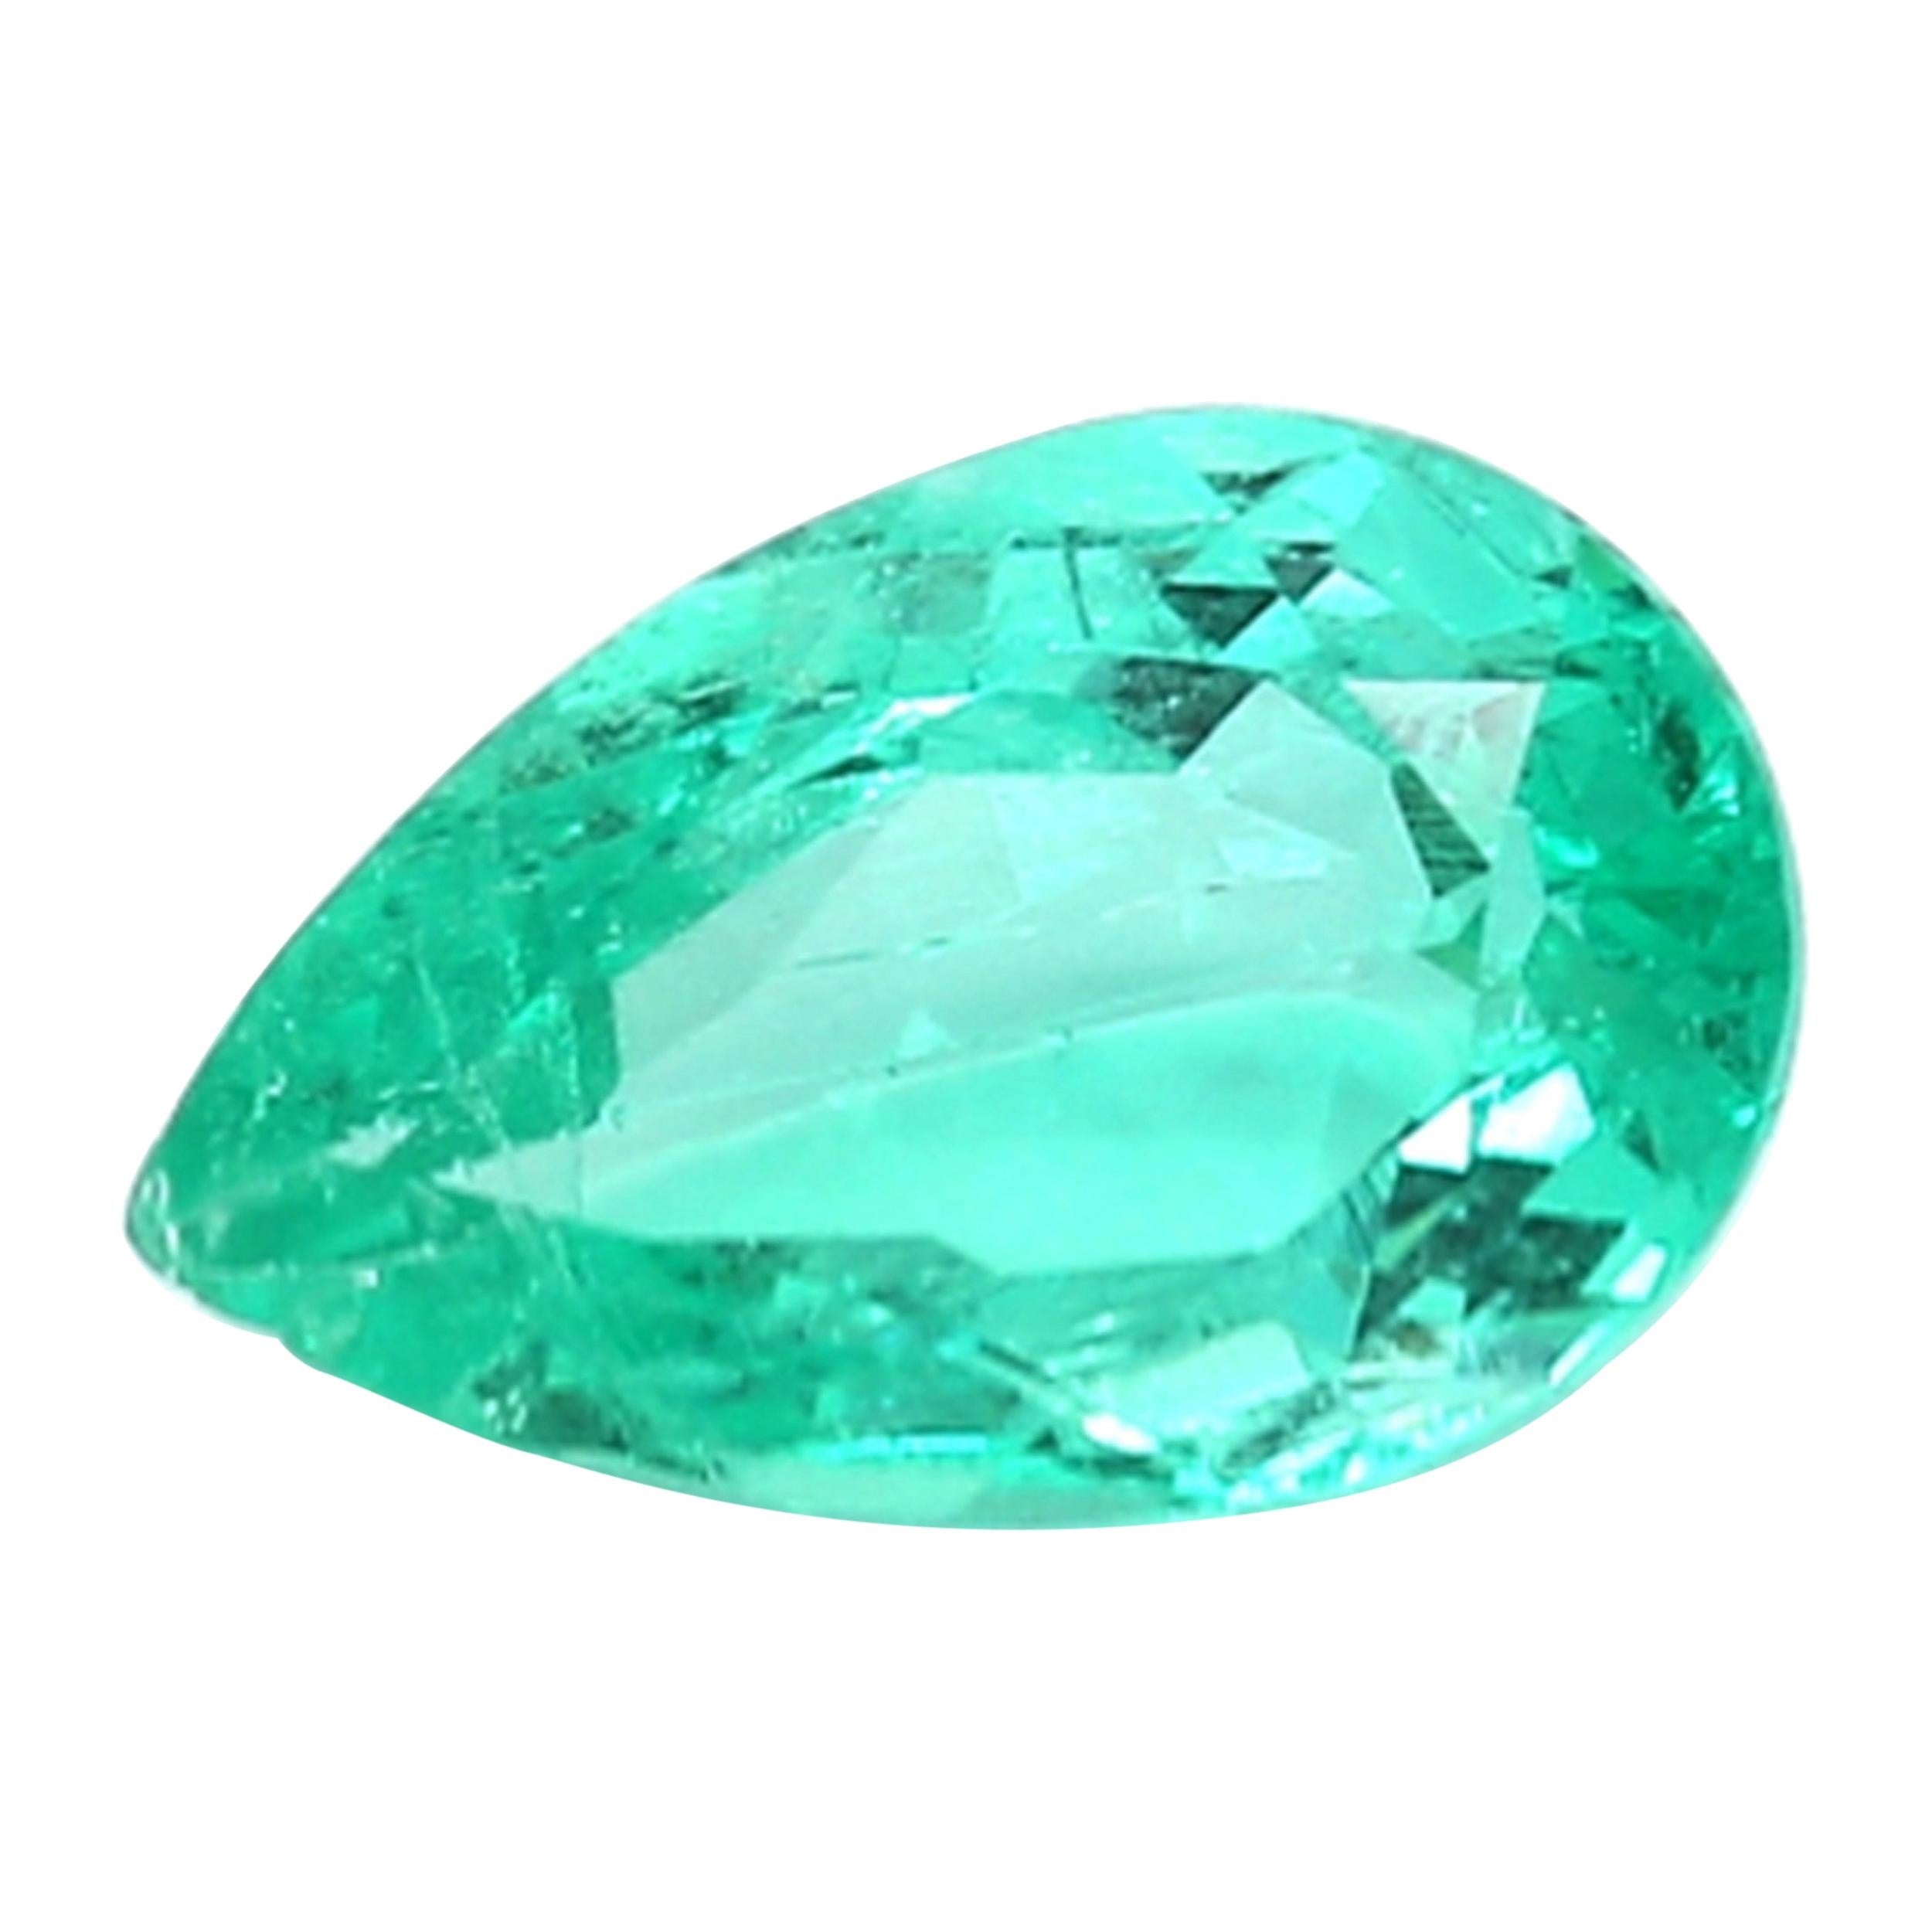 Certified 2.12 Carat Colombian Emerald